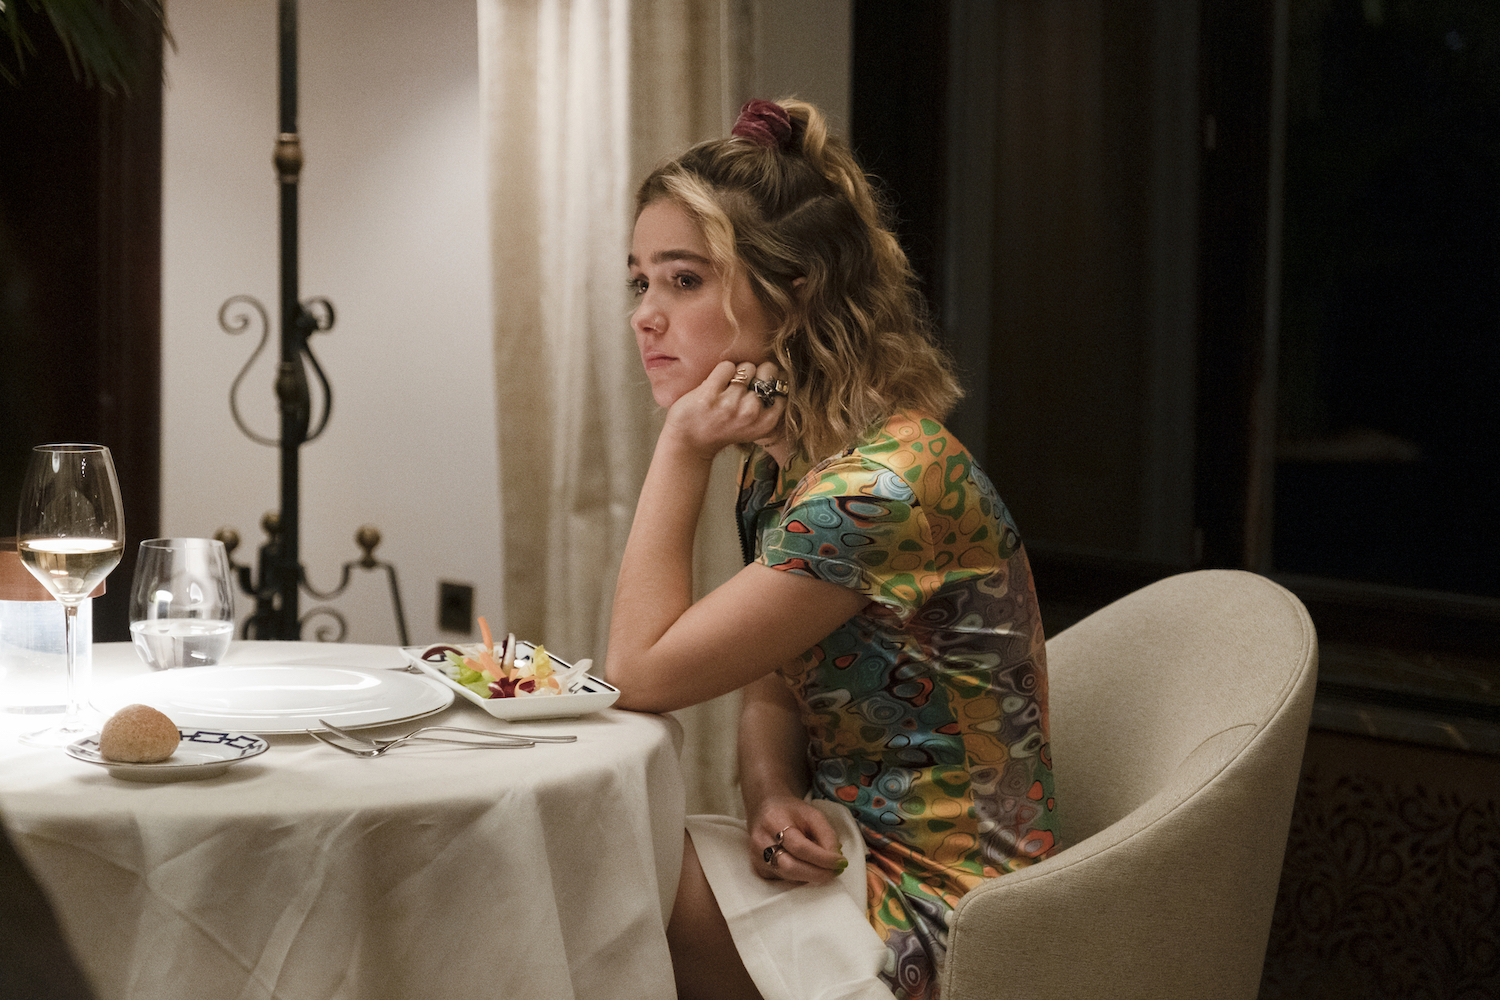 'The White Lotus' stars Haley Lu Richardson seen sitting a restaurant table alone in the season 2 premiere.